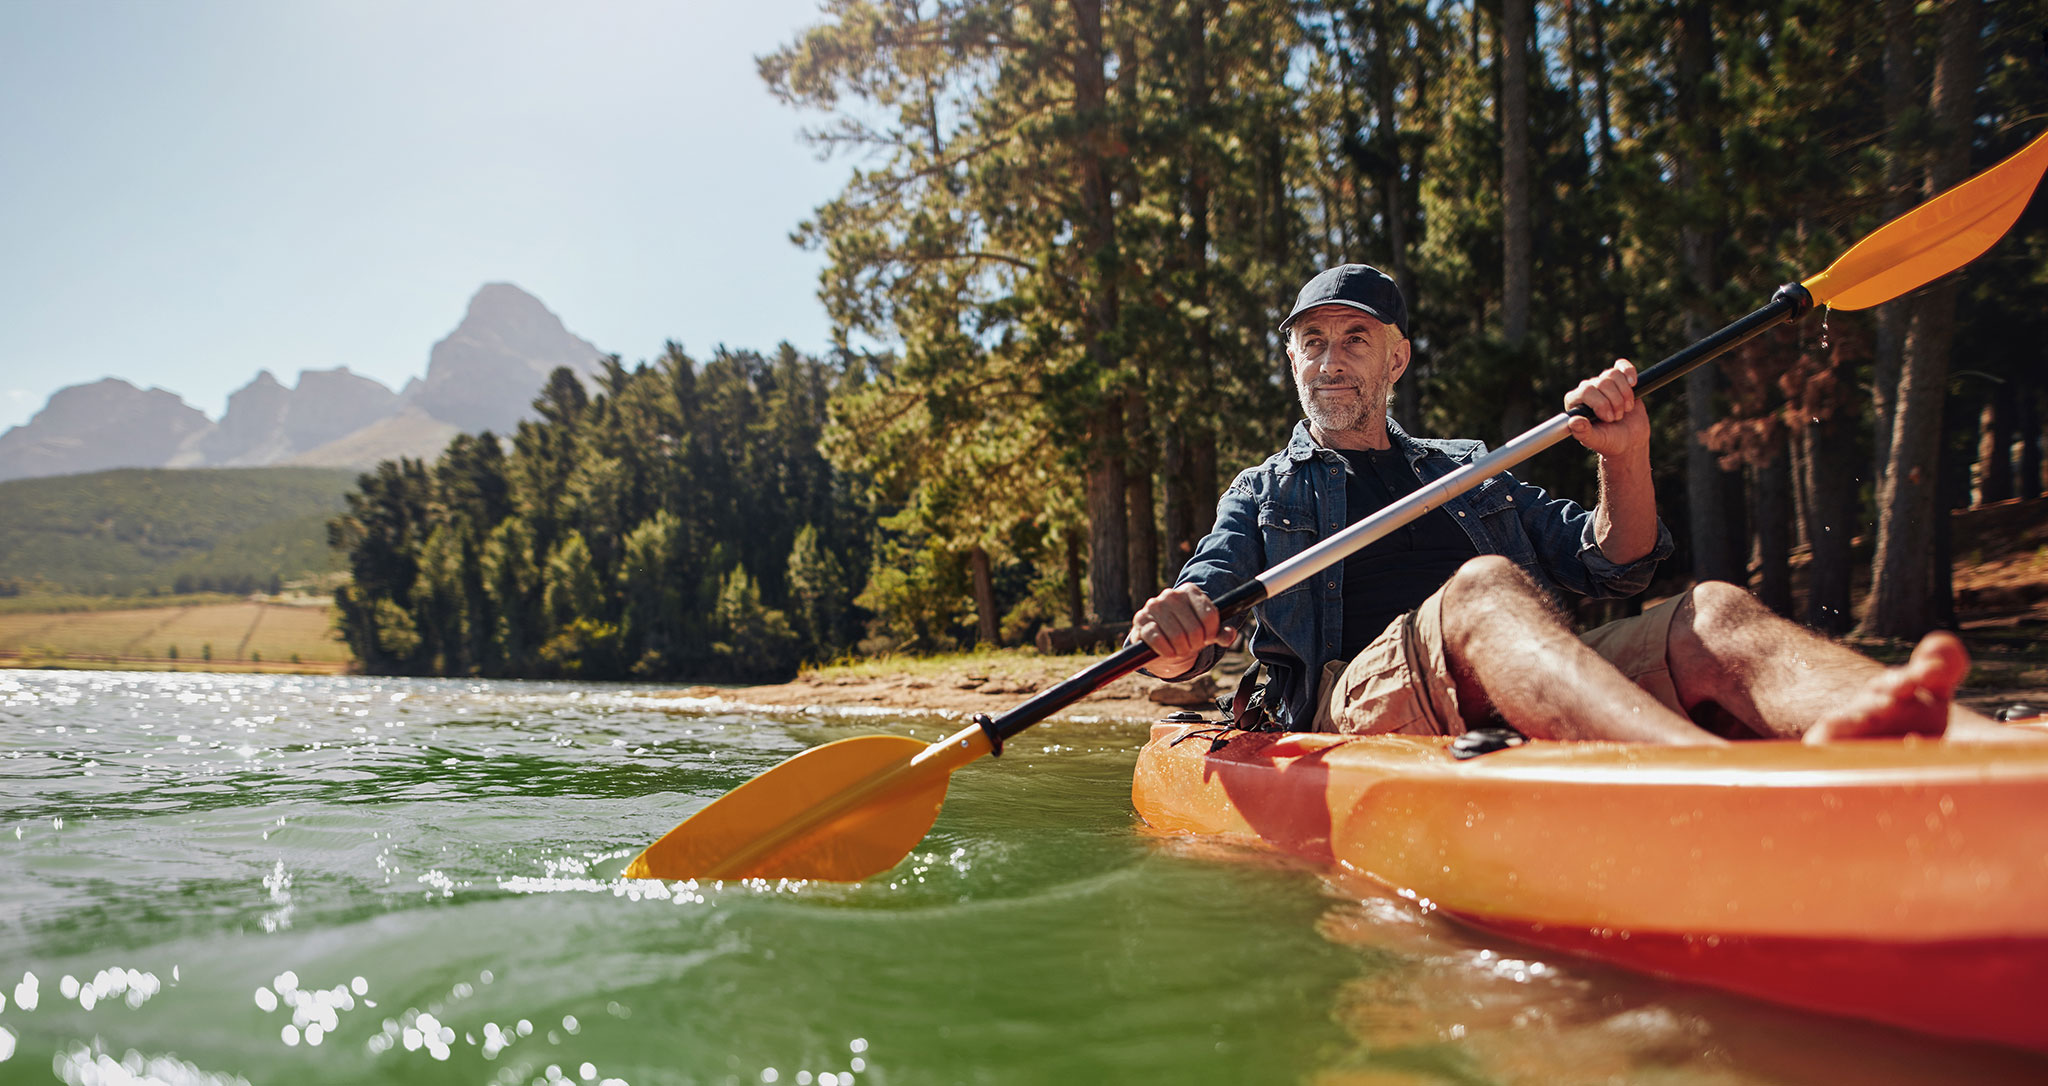 An older man in shorts paddles a kayak on a lake.